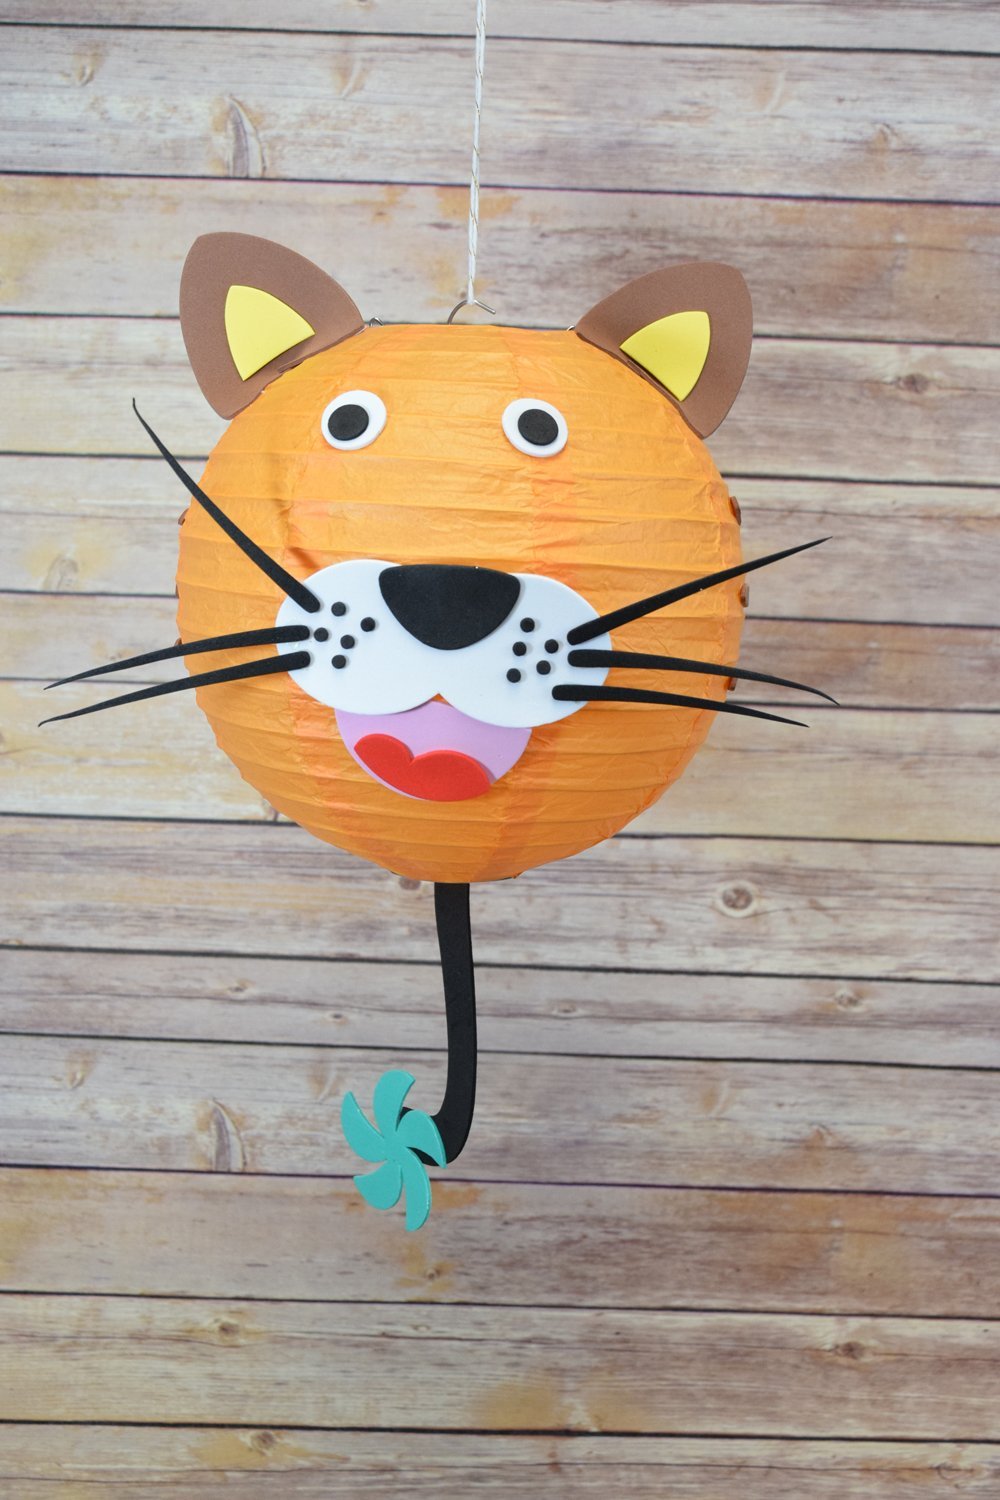 8" Paper Lantern Animal Face DIY Kit - Tiger (Kid Craft Project) - PaperLanternStore.com - Paper Lanterns, Decor, Party Lights & More